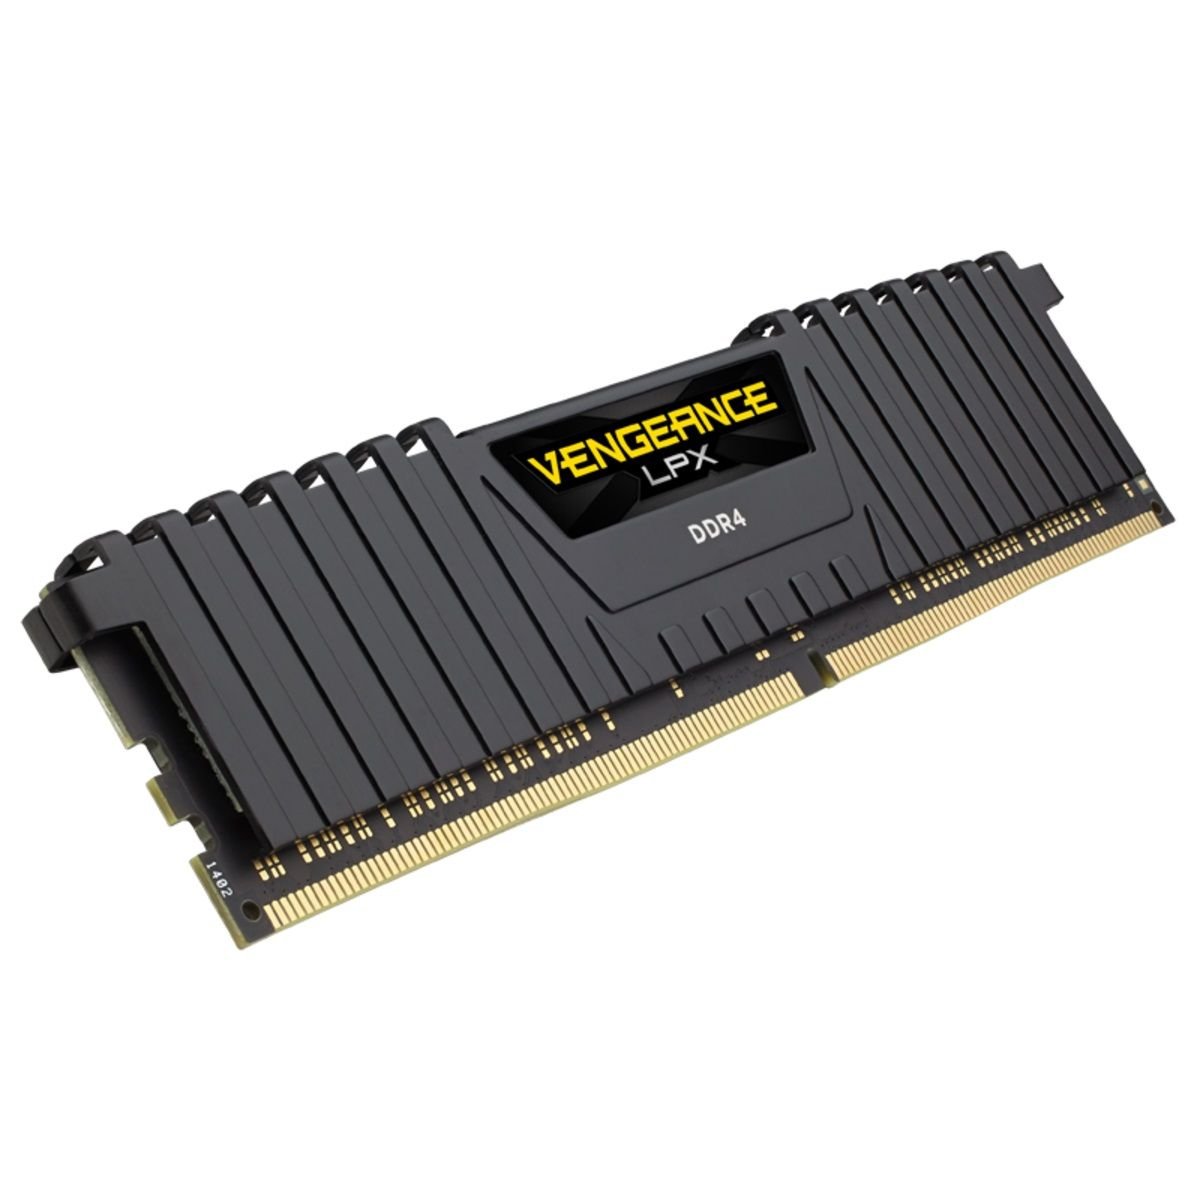  Ram Corsair Vengeance® LPX Heat Spreader 8GB (1 x 8GB) DDR4 DRAM 2666MHz C16 - CMK8GX4M1A2666C16 